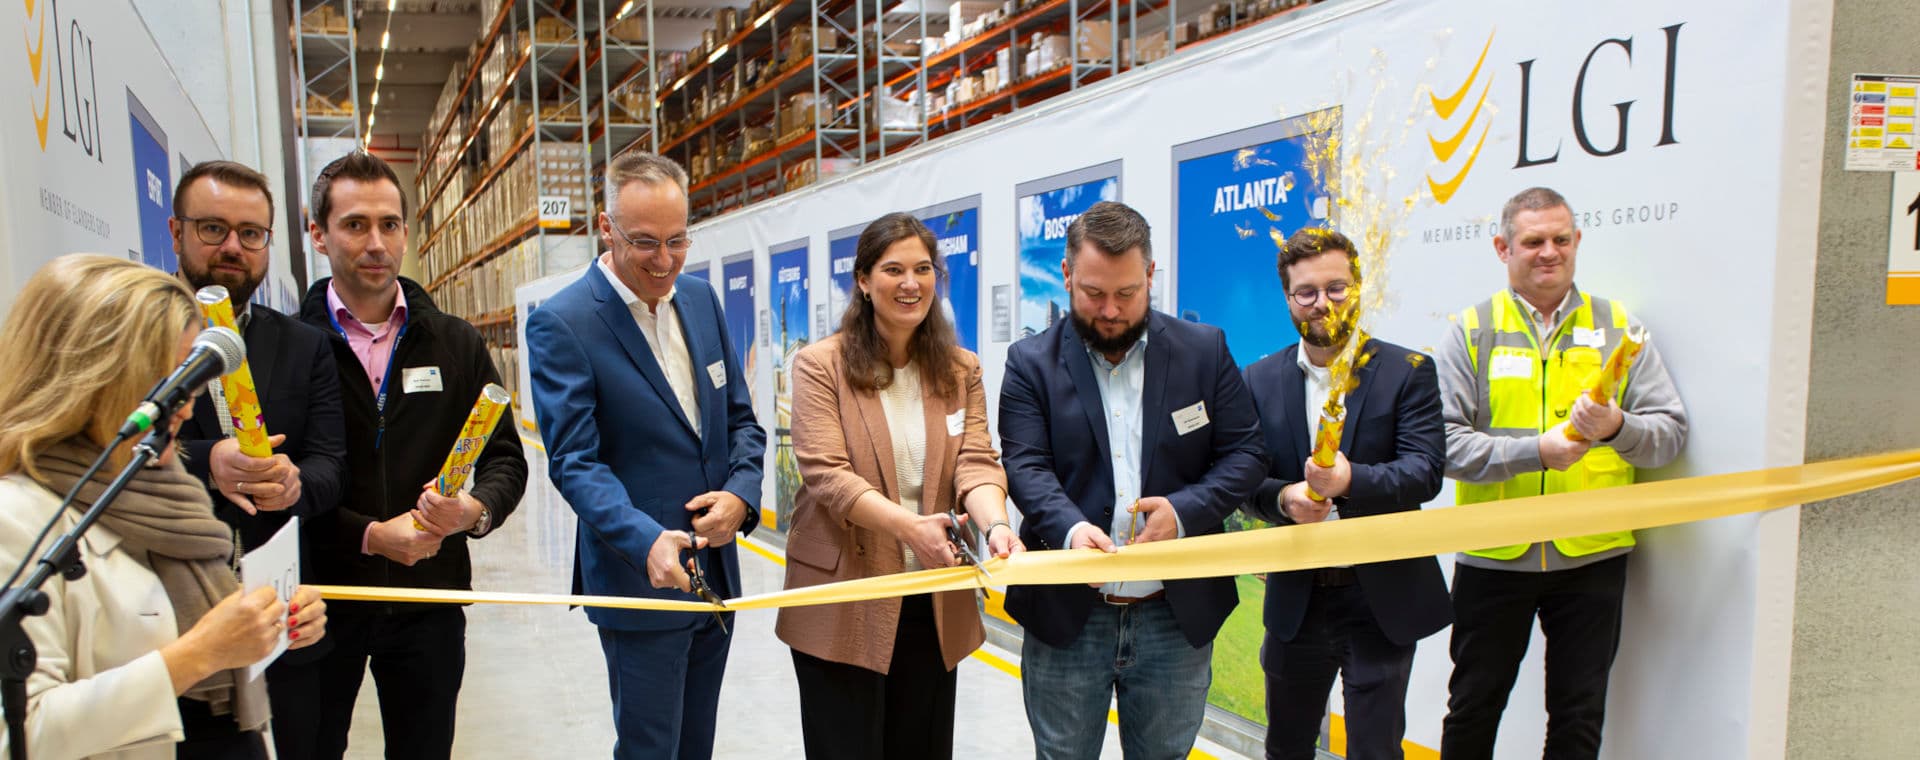 LGI opens second location in Erfurt